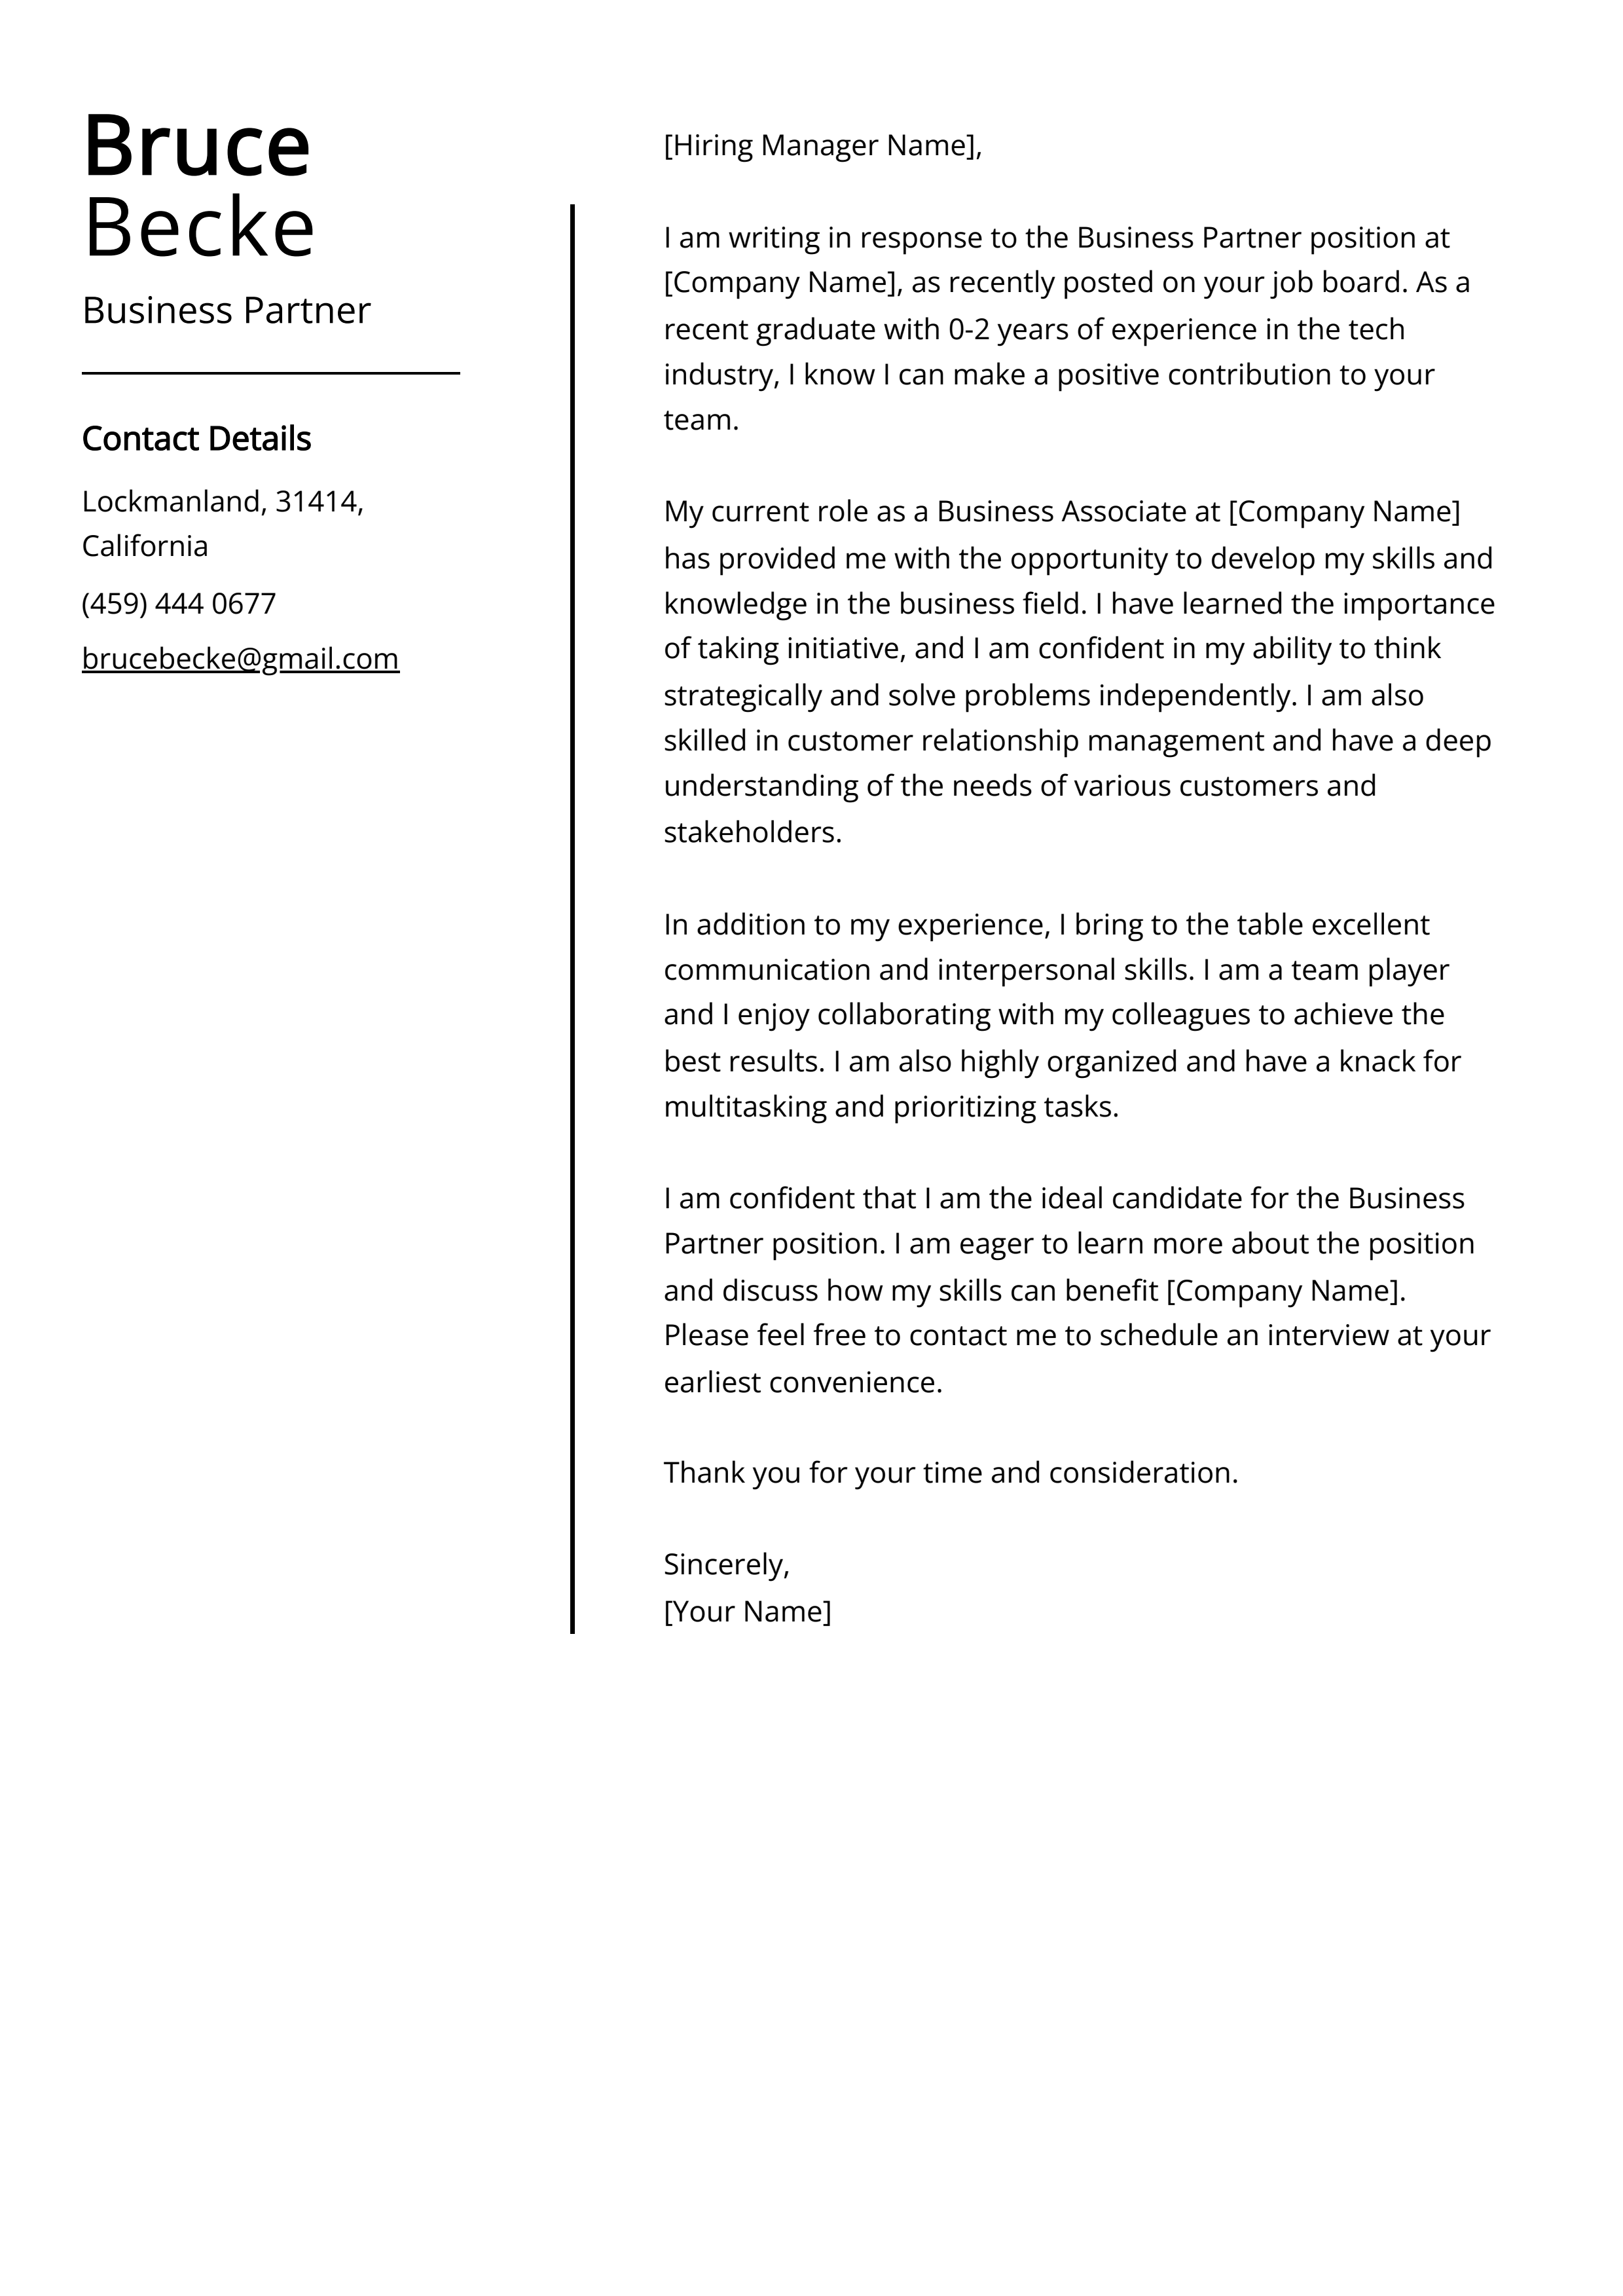 Business Partner Cover Letter Example